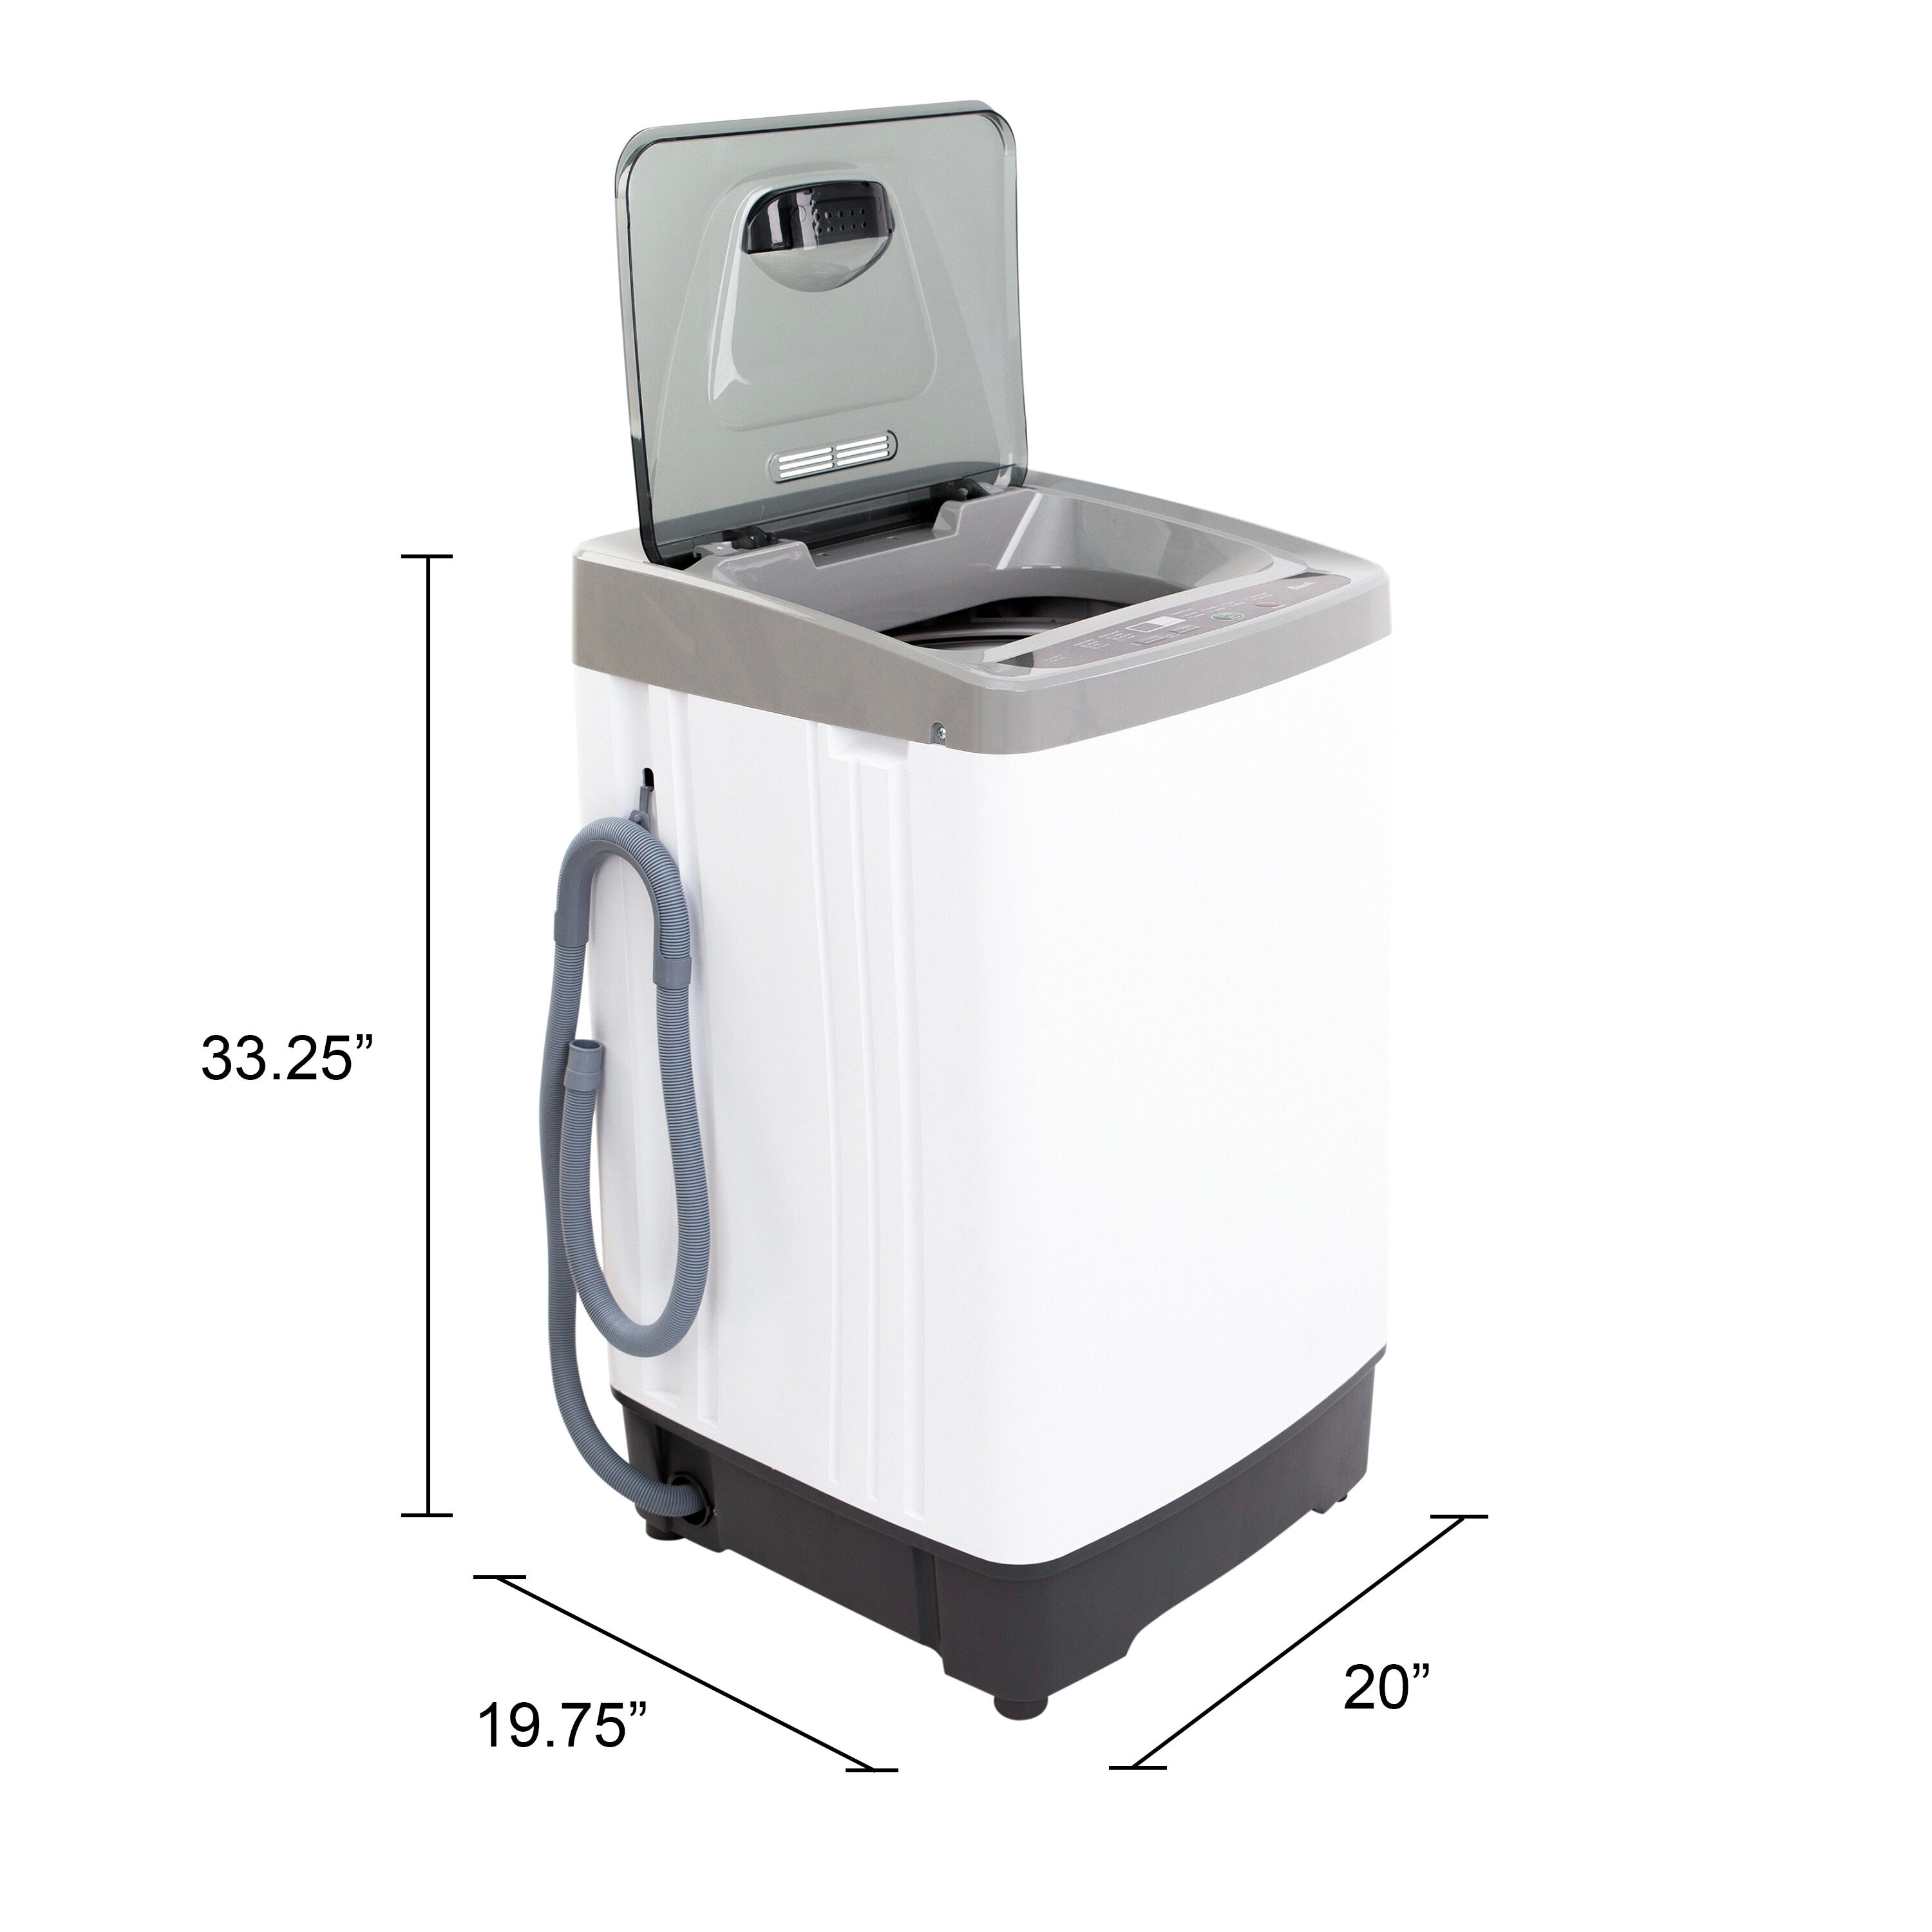 COMFEE' Washing Machine 2.4 Cu.ft LED Portable Washin